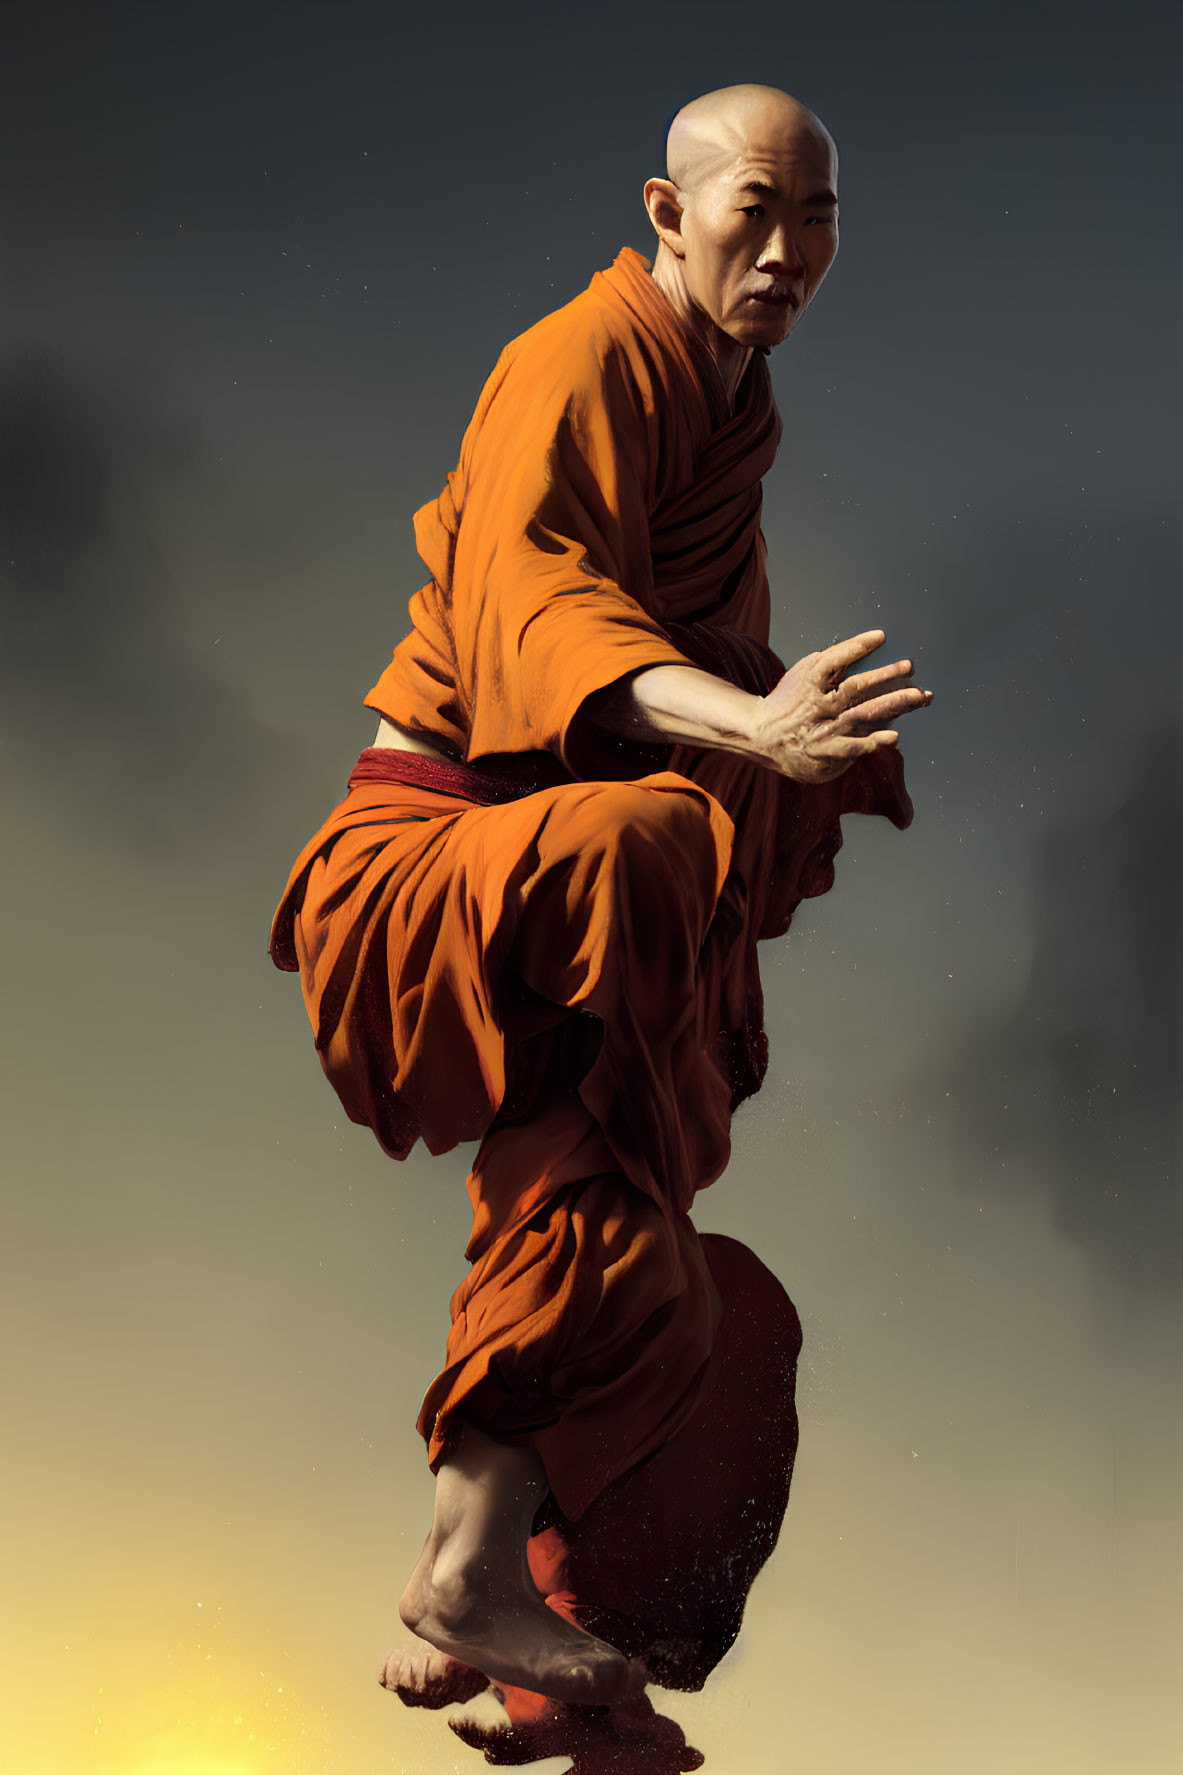 Monk in orange robes practicing balanced pose against gradient sky.